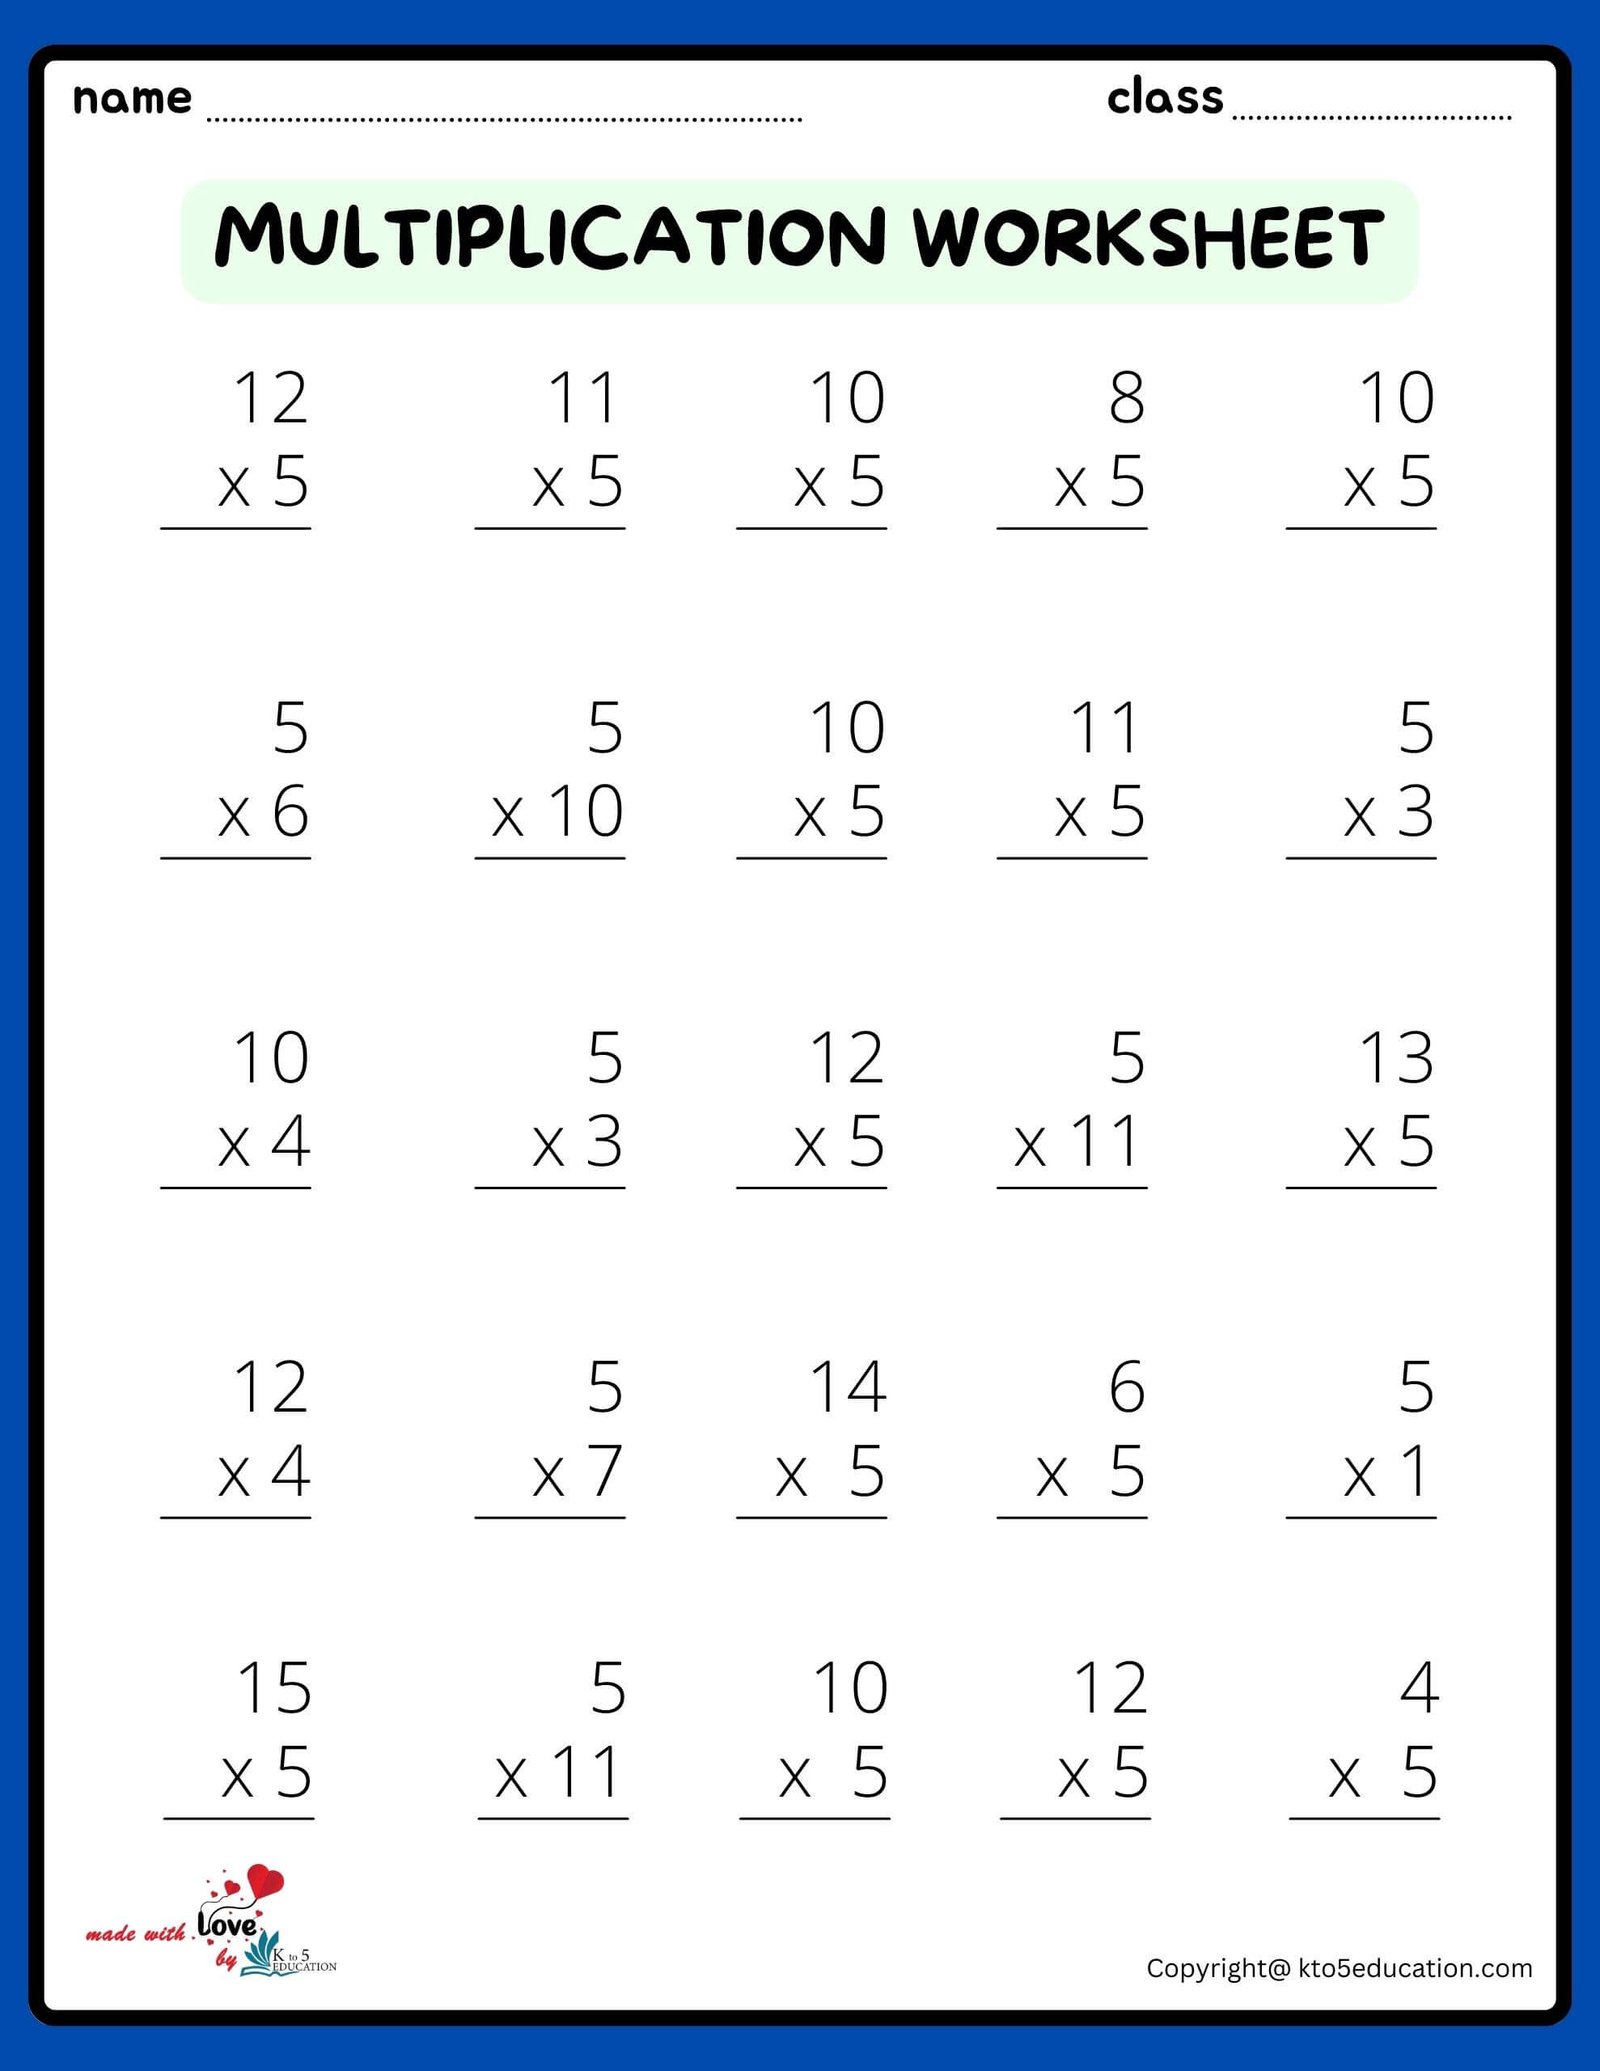 5x5 Multiplication Worksheet